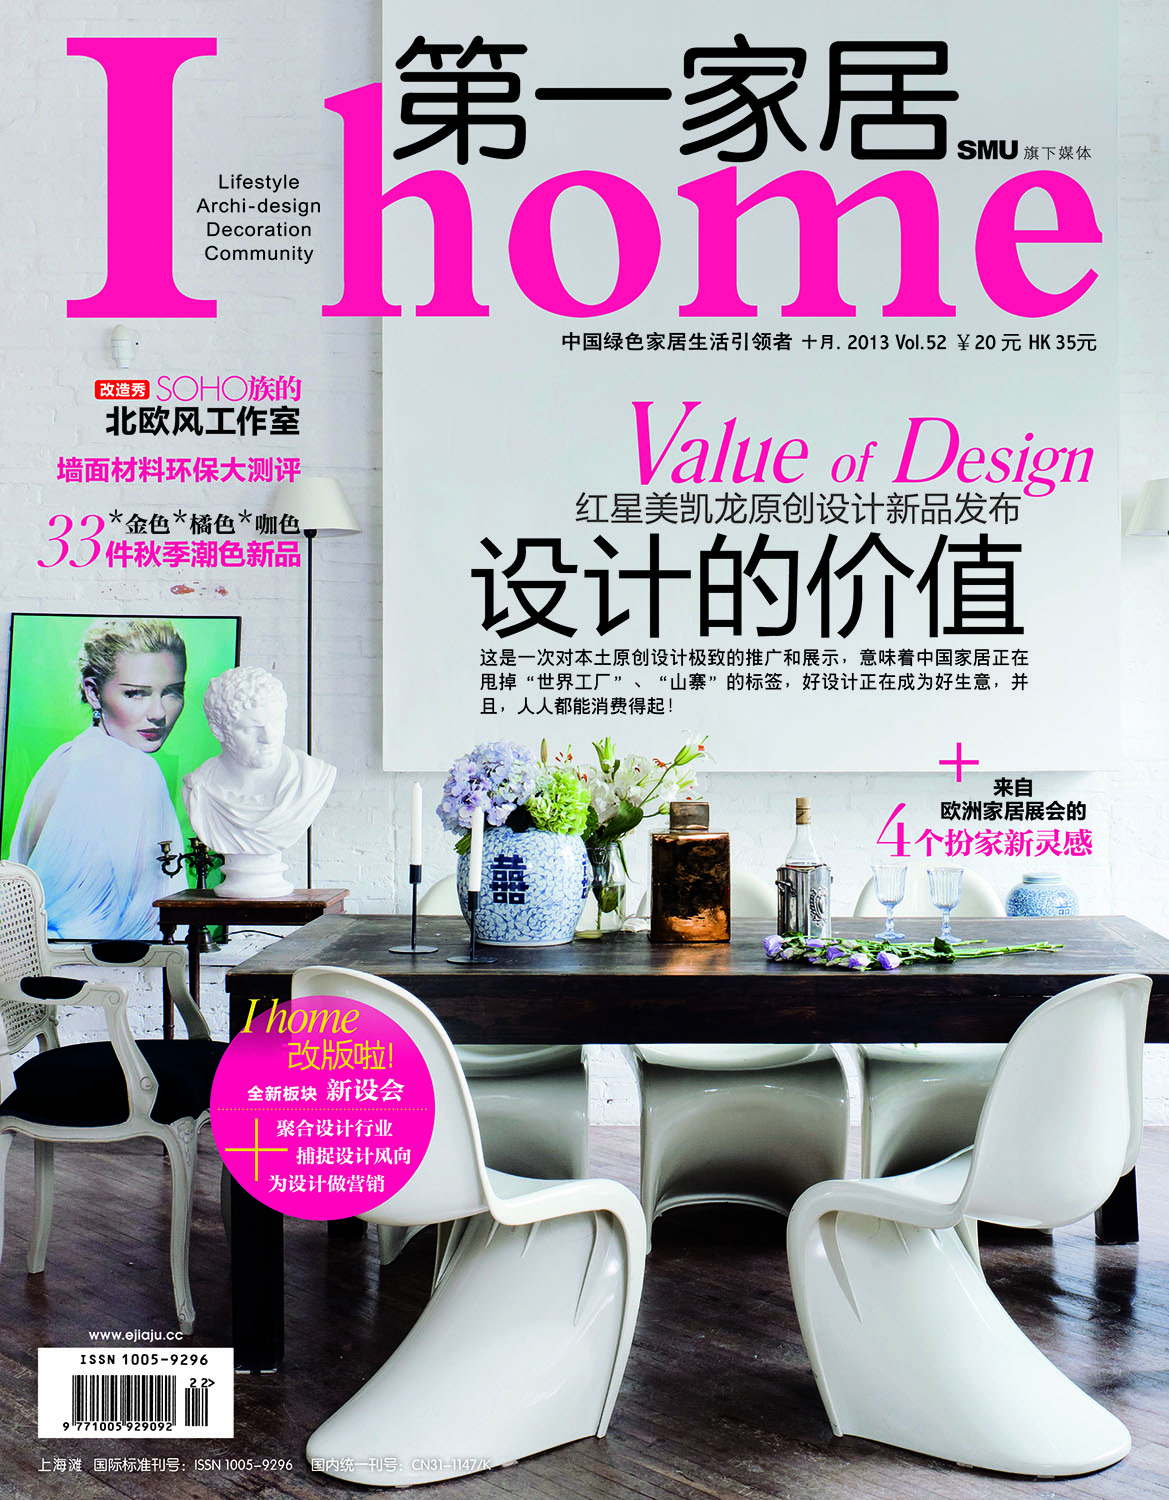 I Home cover 2013_10.jpg